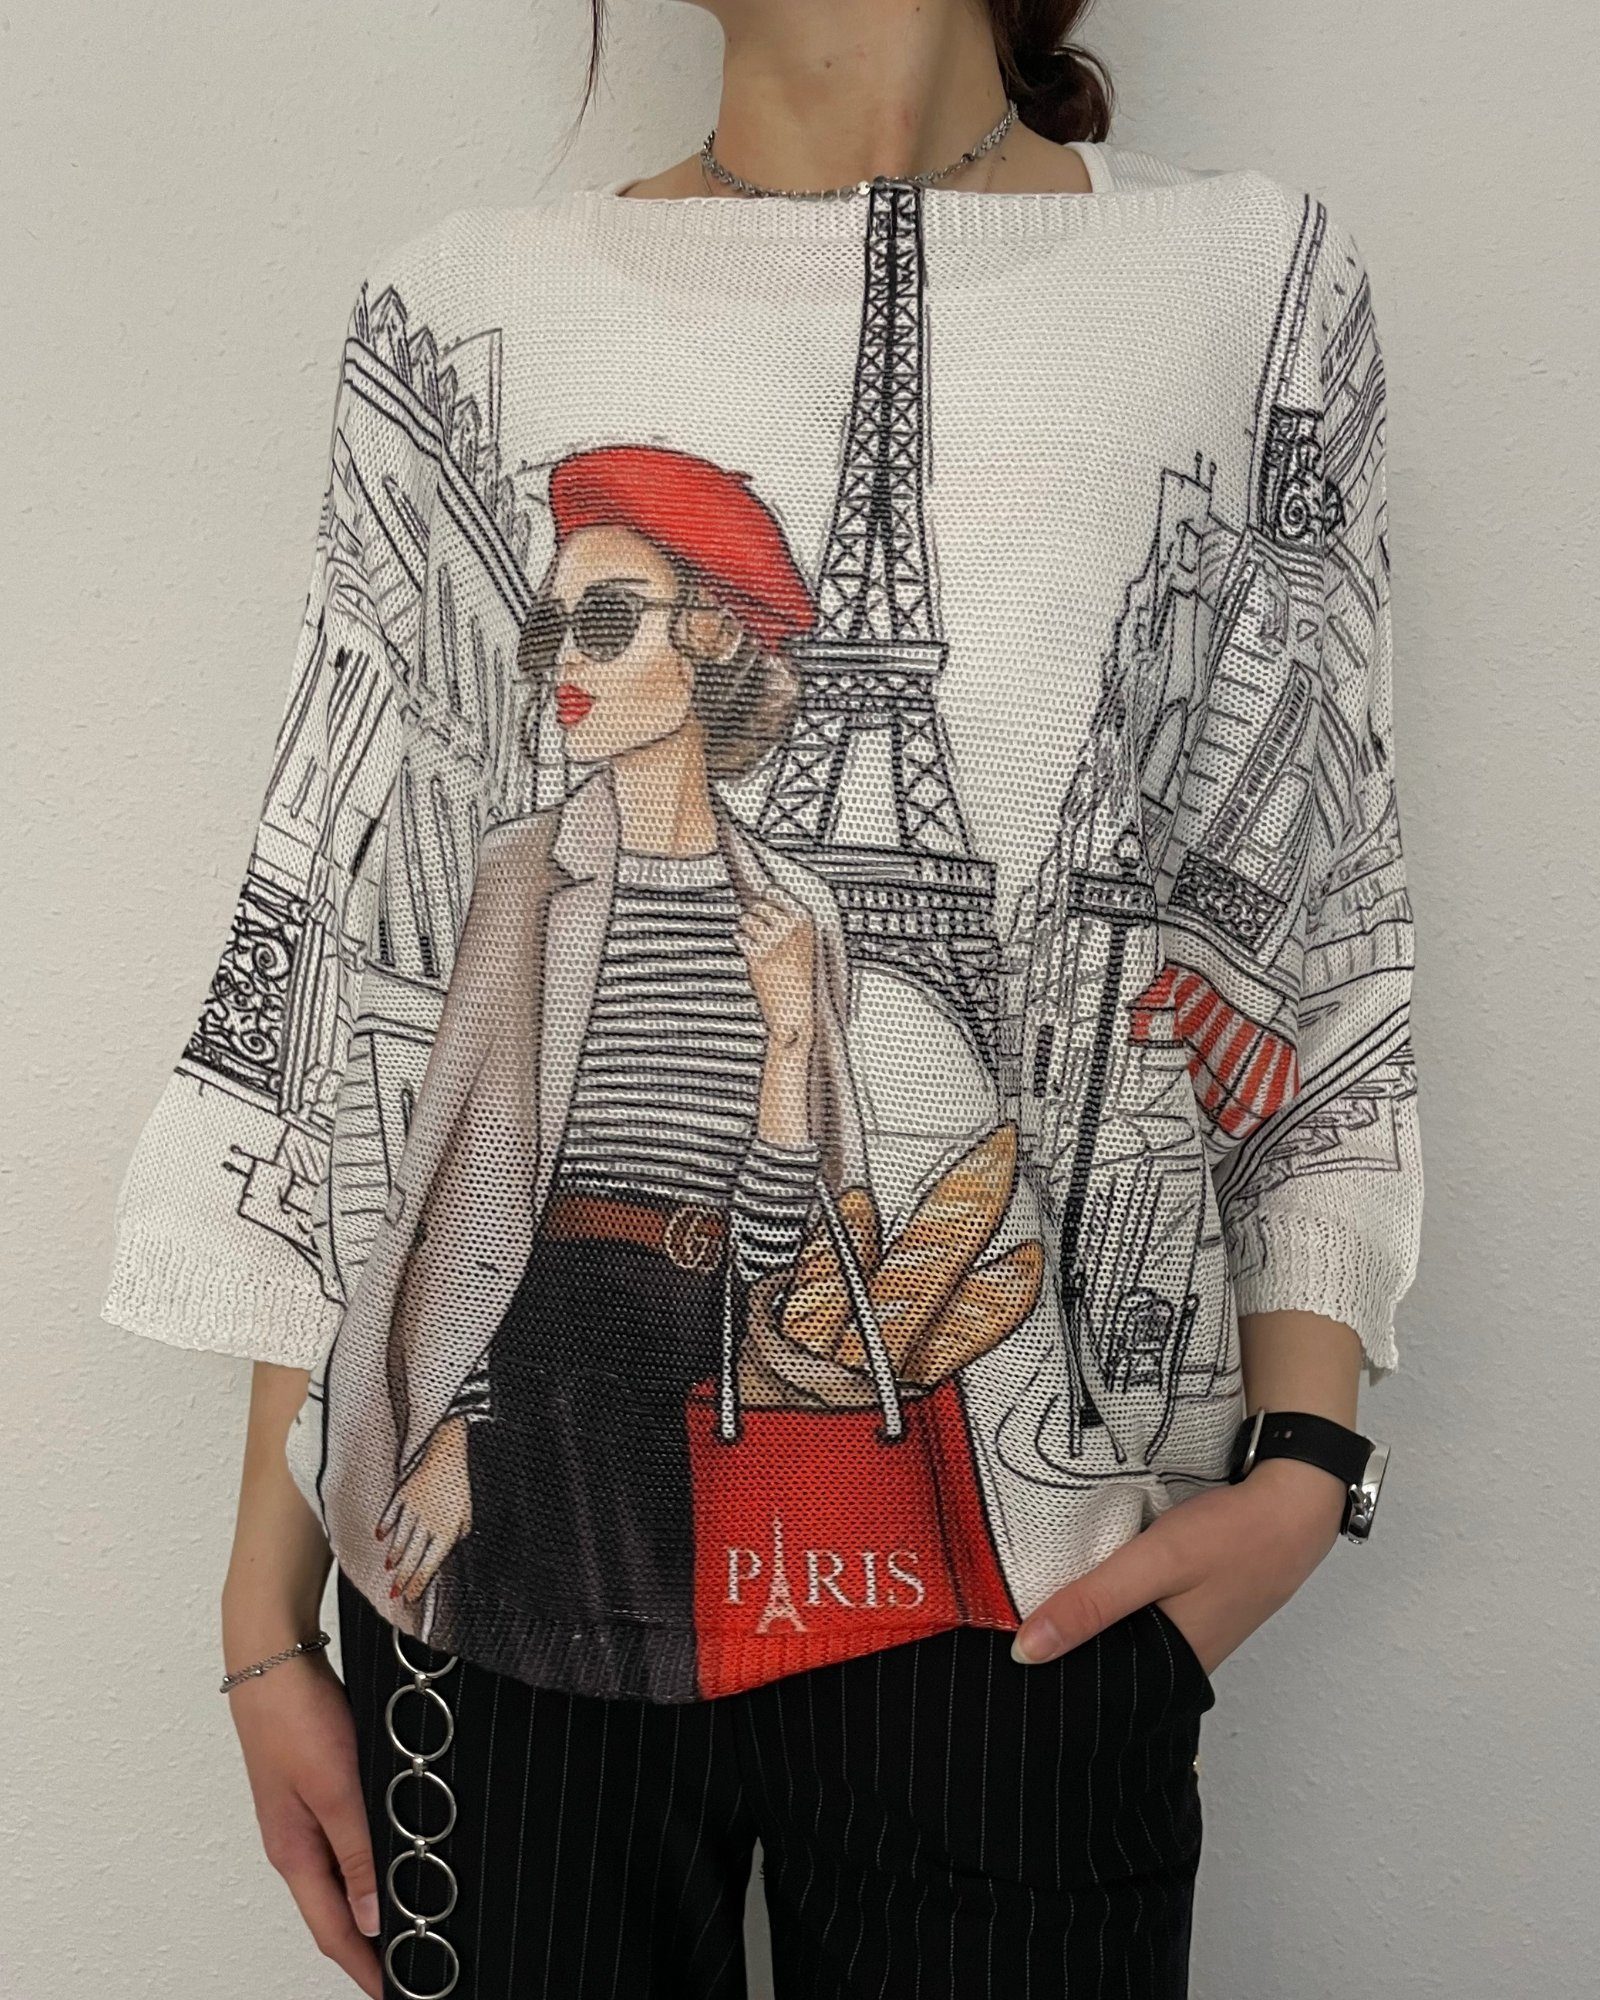 ITALY VIBES Langarmshirt - FRANCE - Langarmshirt - leichter Pullover - Print Paris - ONE SIZE passt hier Gr. XS - L